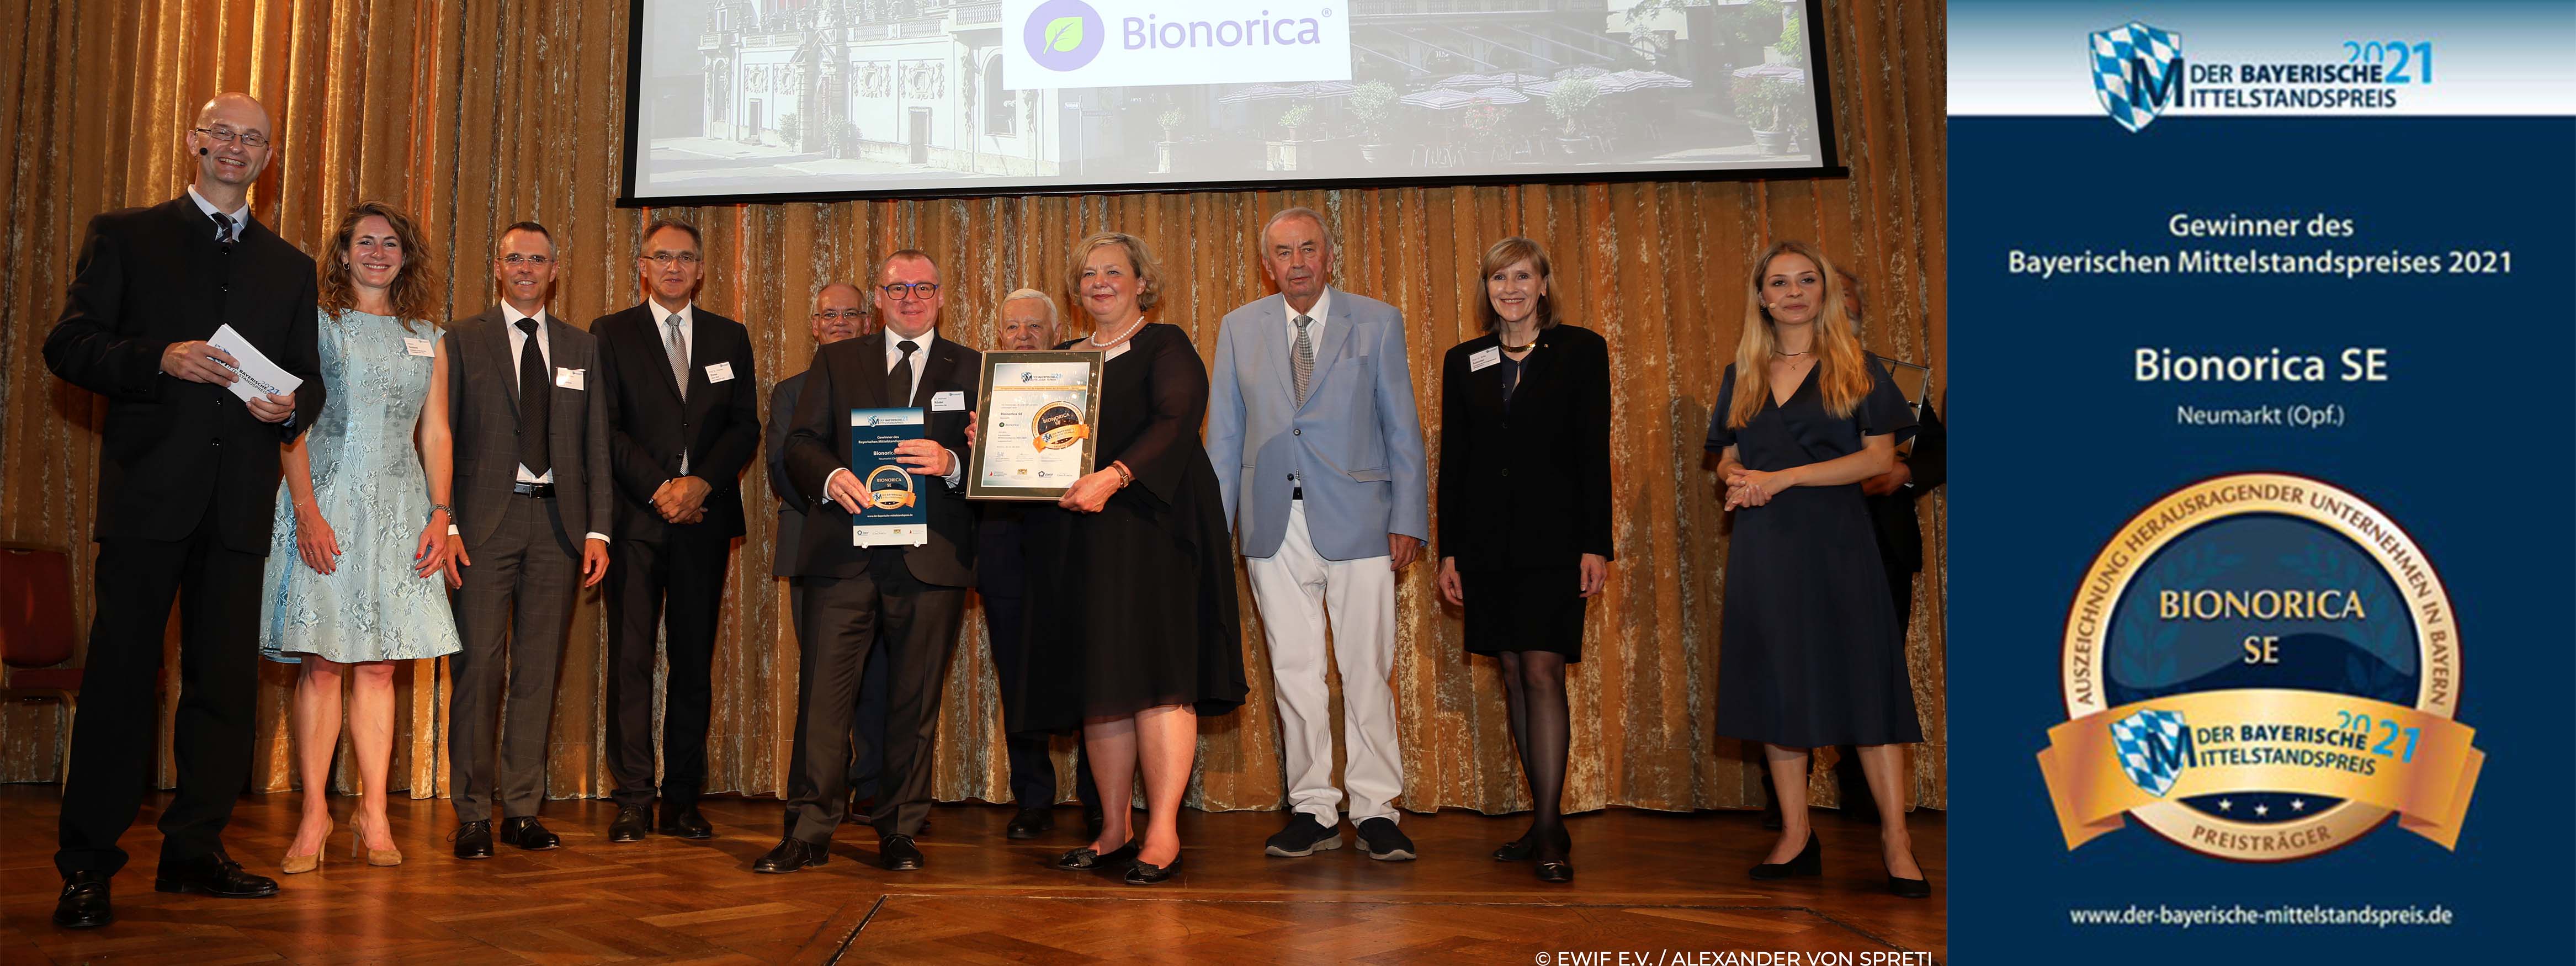 Bionorica is the winner of the Bavarian SME Award 2021/22